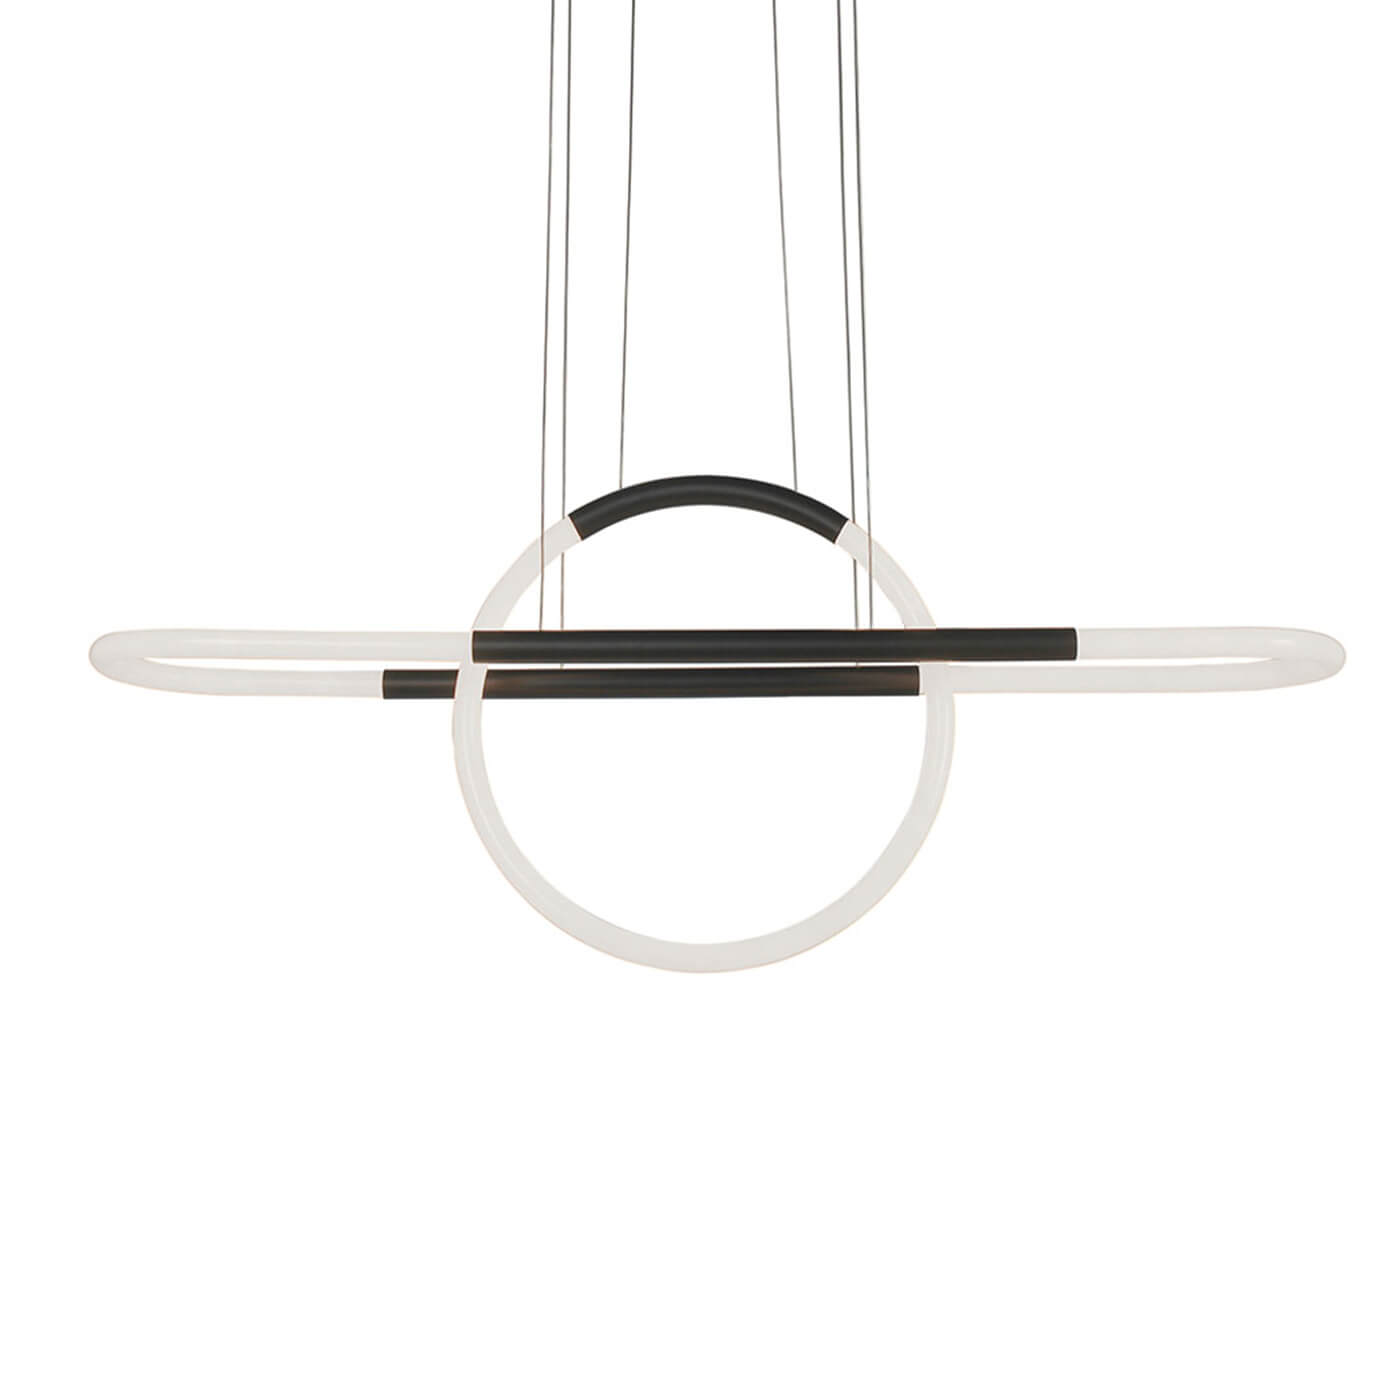 Cauti o lampa suspendata alb-neagra GIROTONDO S1L cu LED 20W, design modern, futurist, pentru living, dining sau dormitor din colectia de lustre si candelabre Domicilio?